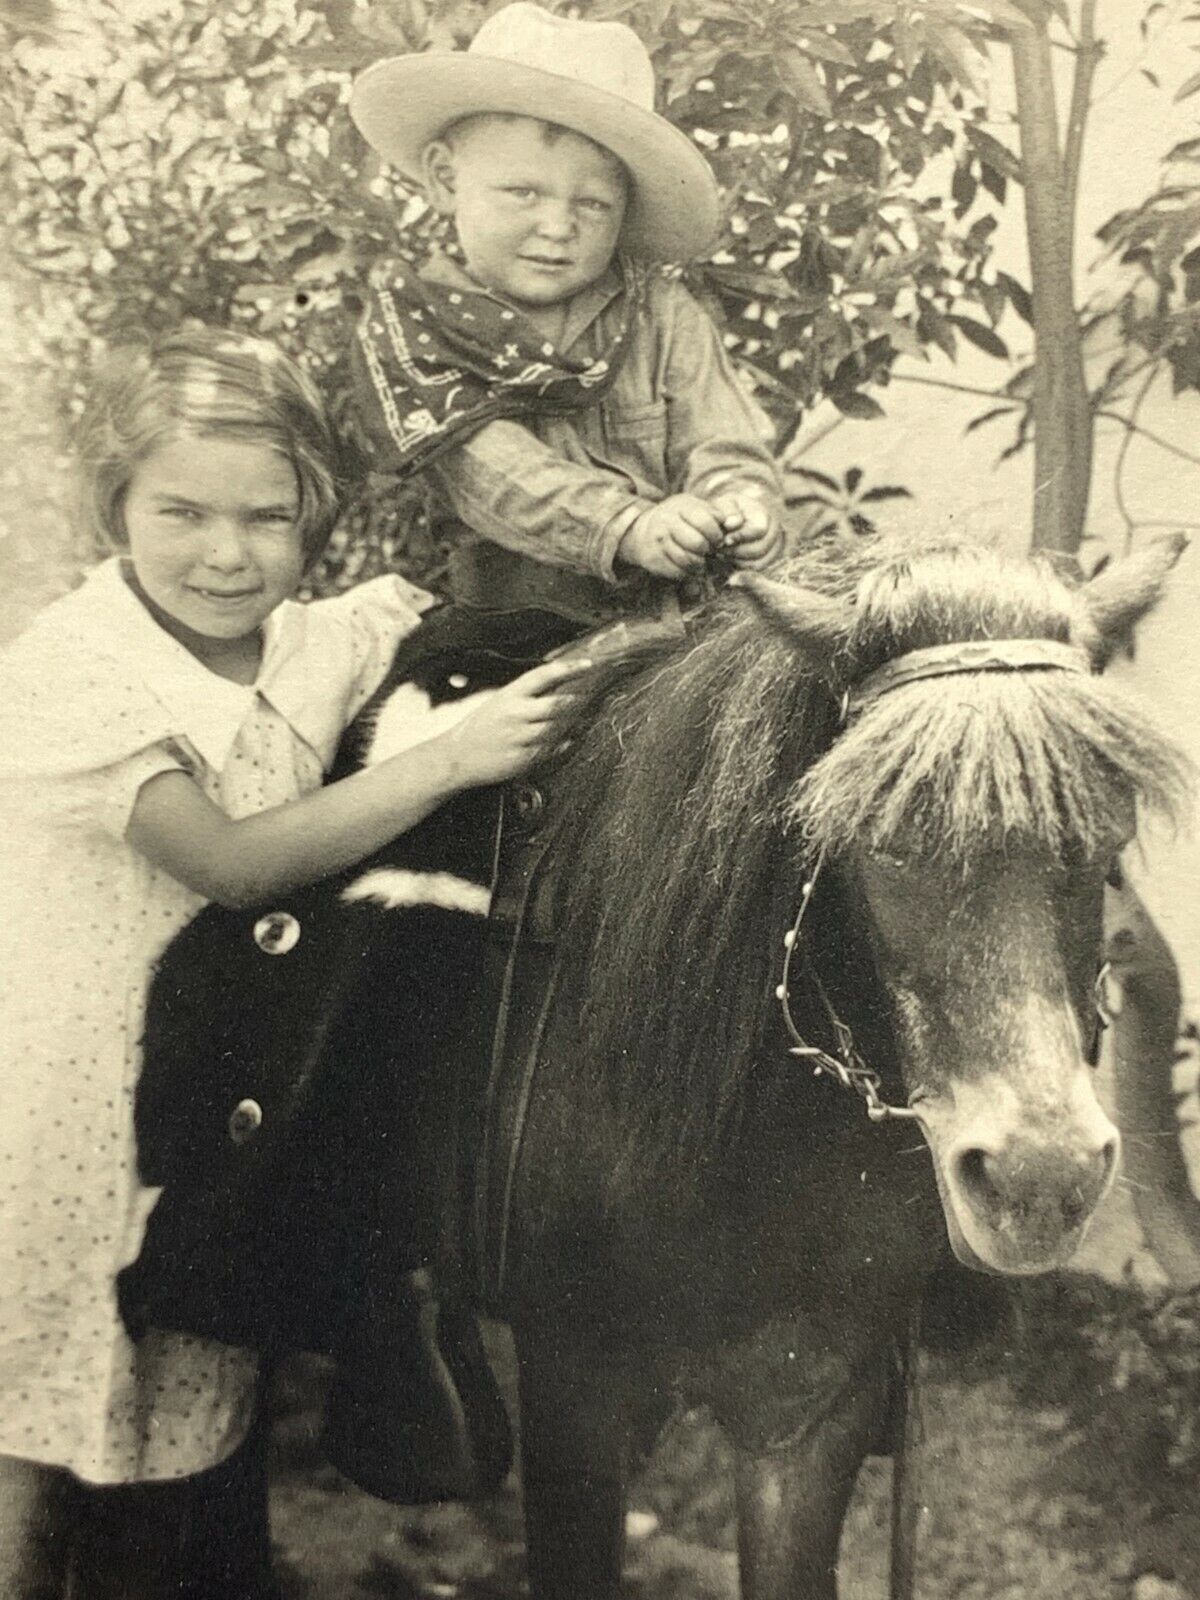 AgD) Found Photograph Boy Girl Pony Horse Cowboy 